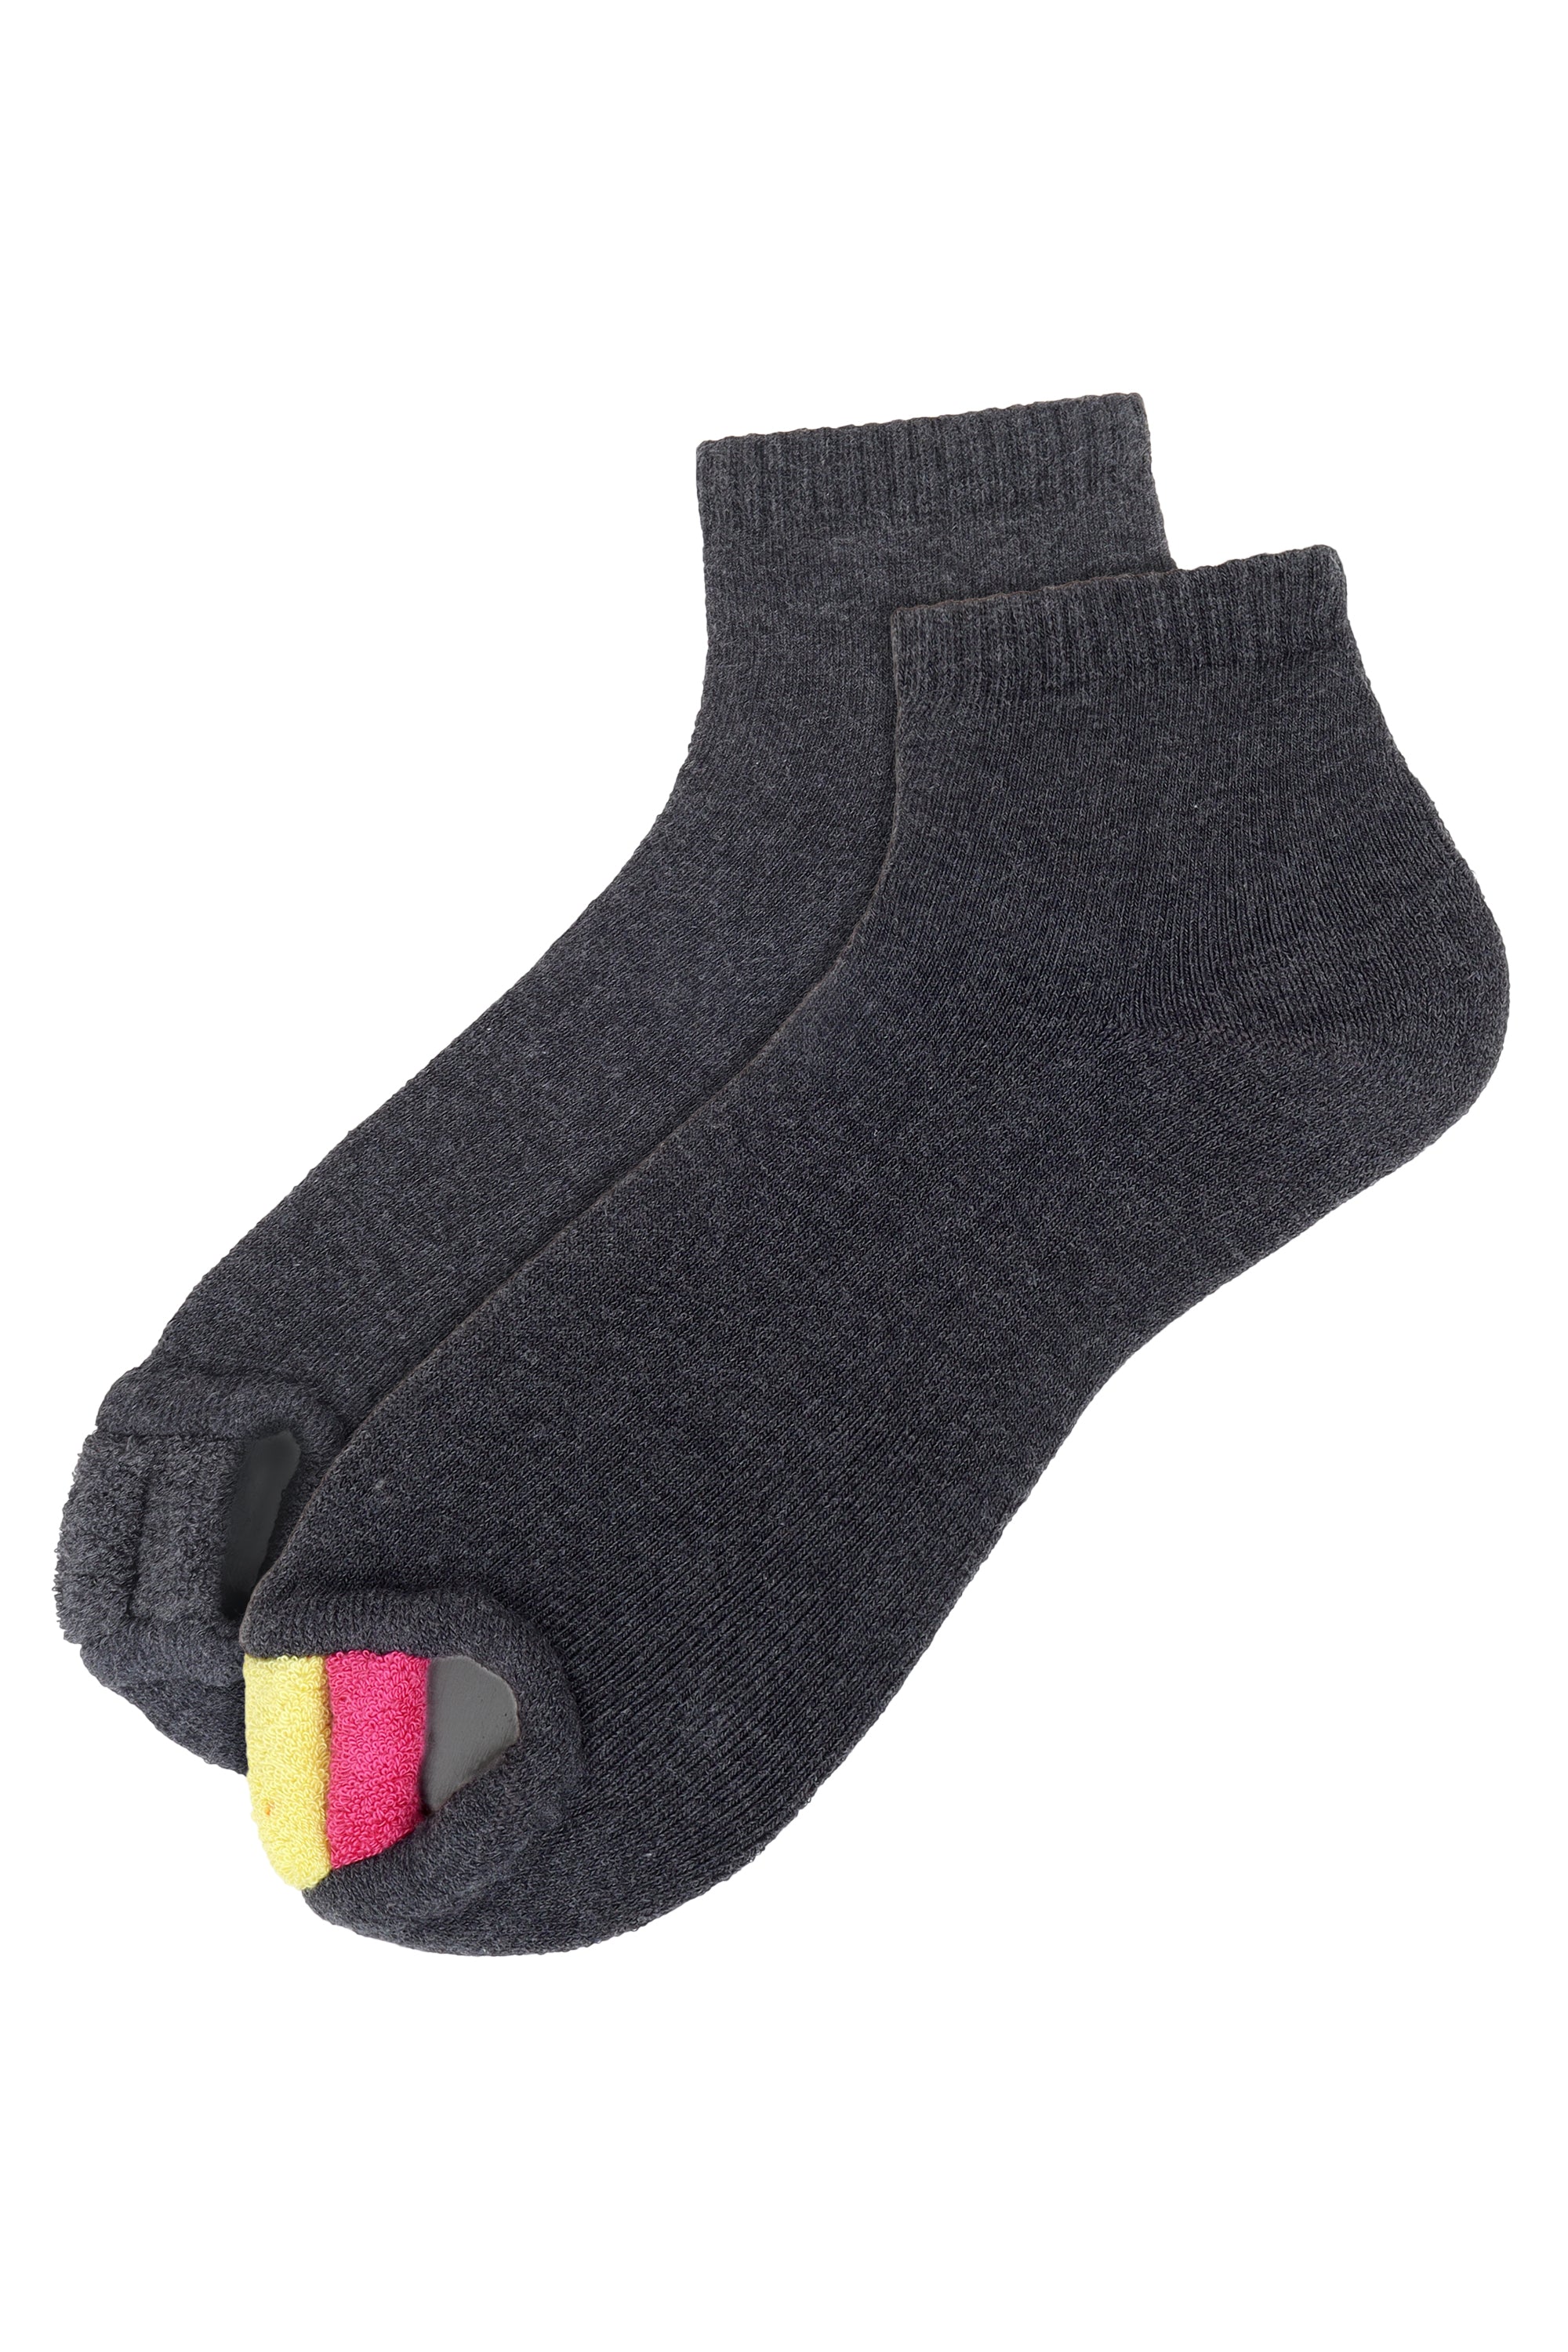 Foot Alignment Sock Grey Pack of 2 Pairs